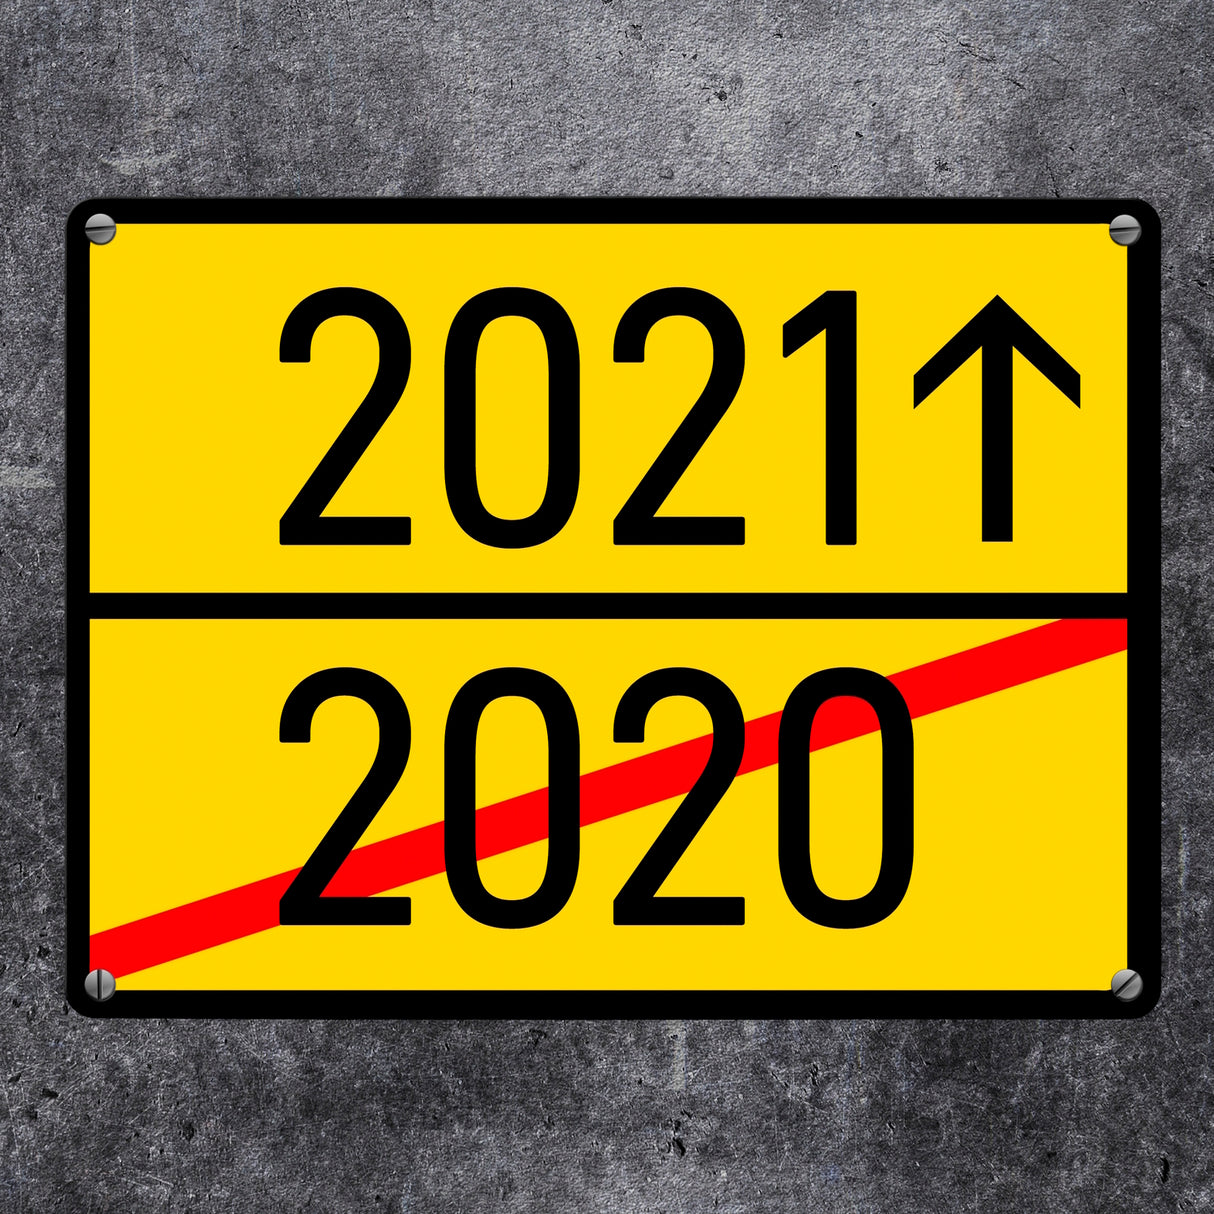 Anfang 2021 Ende 2020 Stadtschild Metallschild